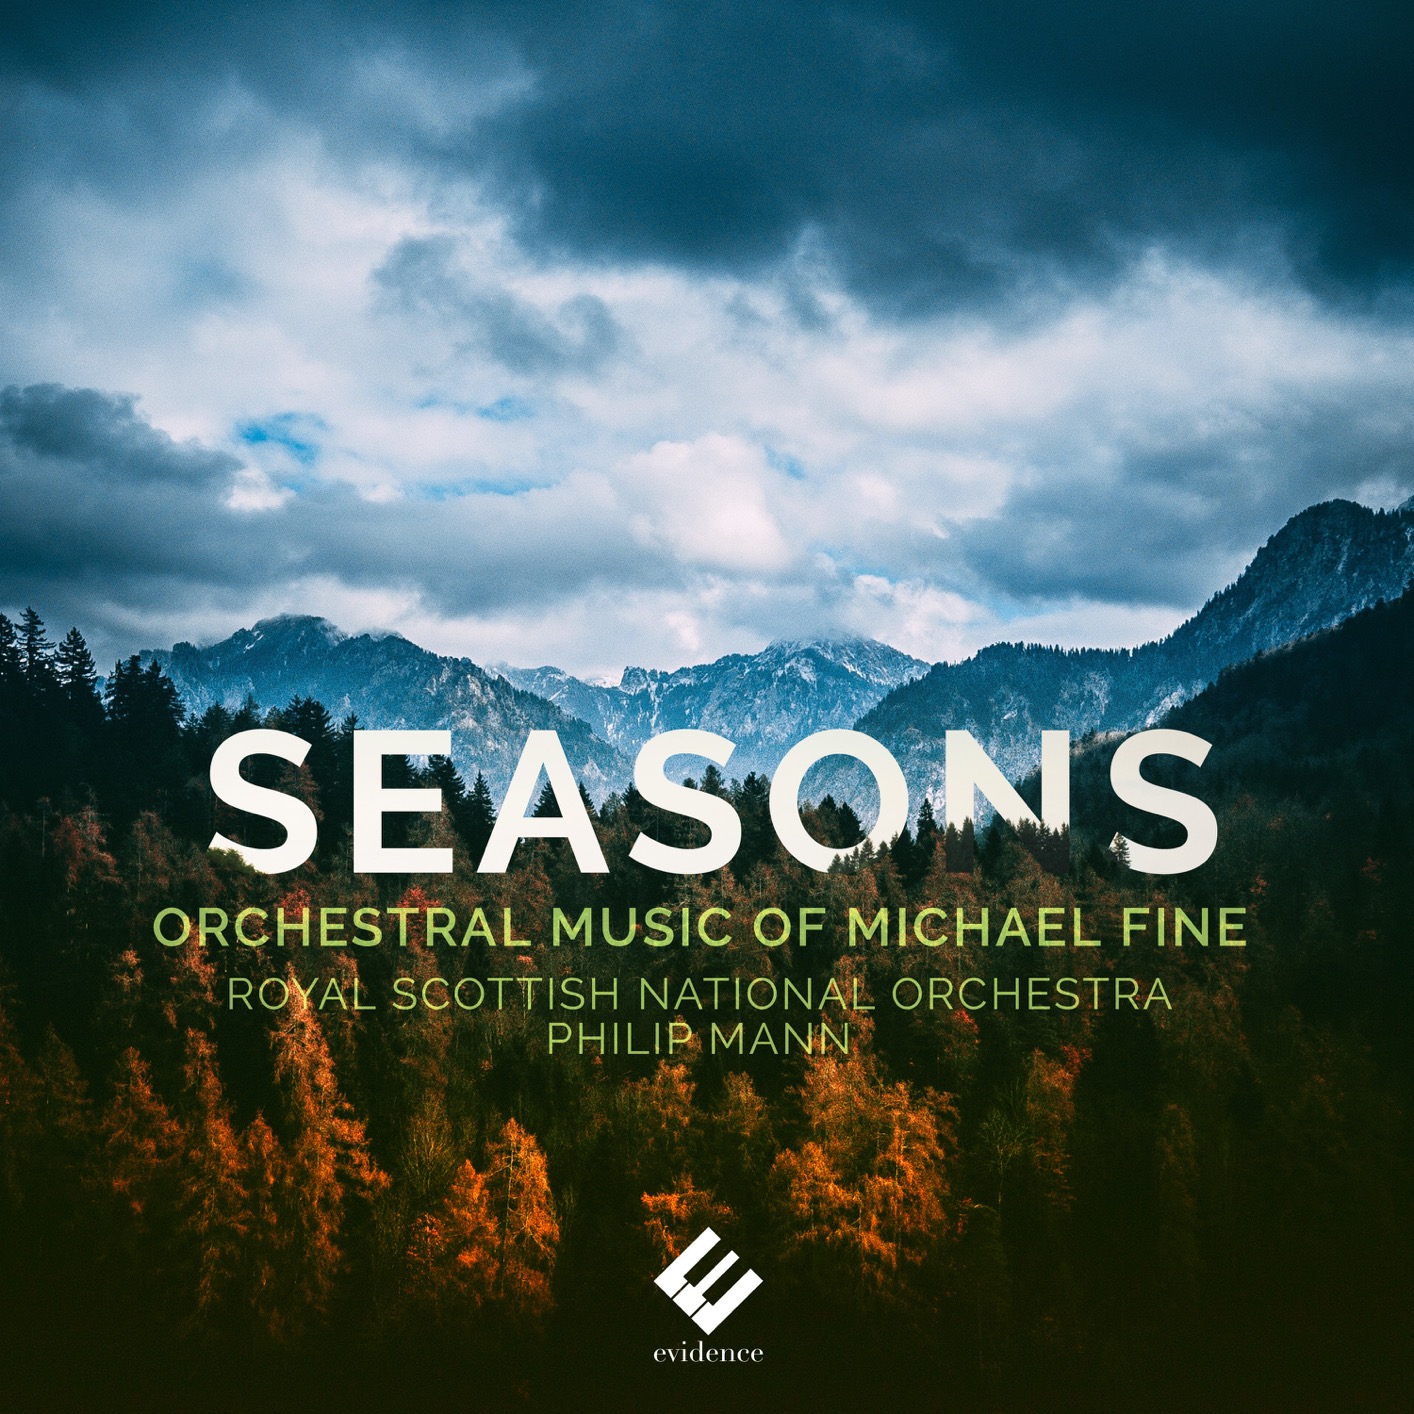 Royal Scottish National Orchestra & Philip Mann – Seasons: Orchestral Music of Michael Fine (2019) [FLAC 24bit/96kHz]